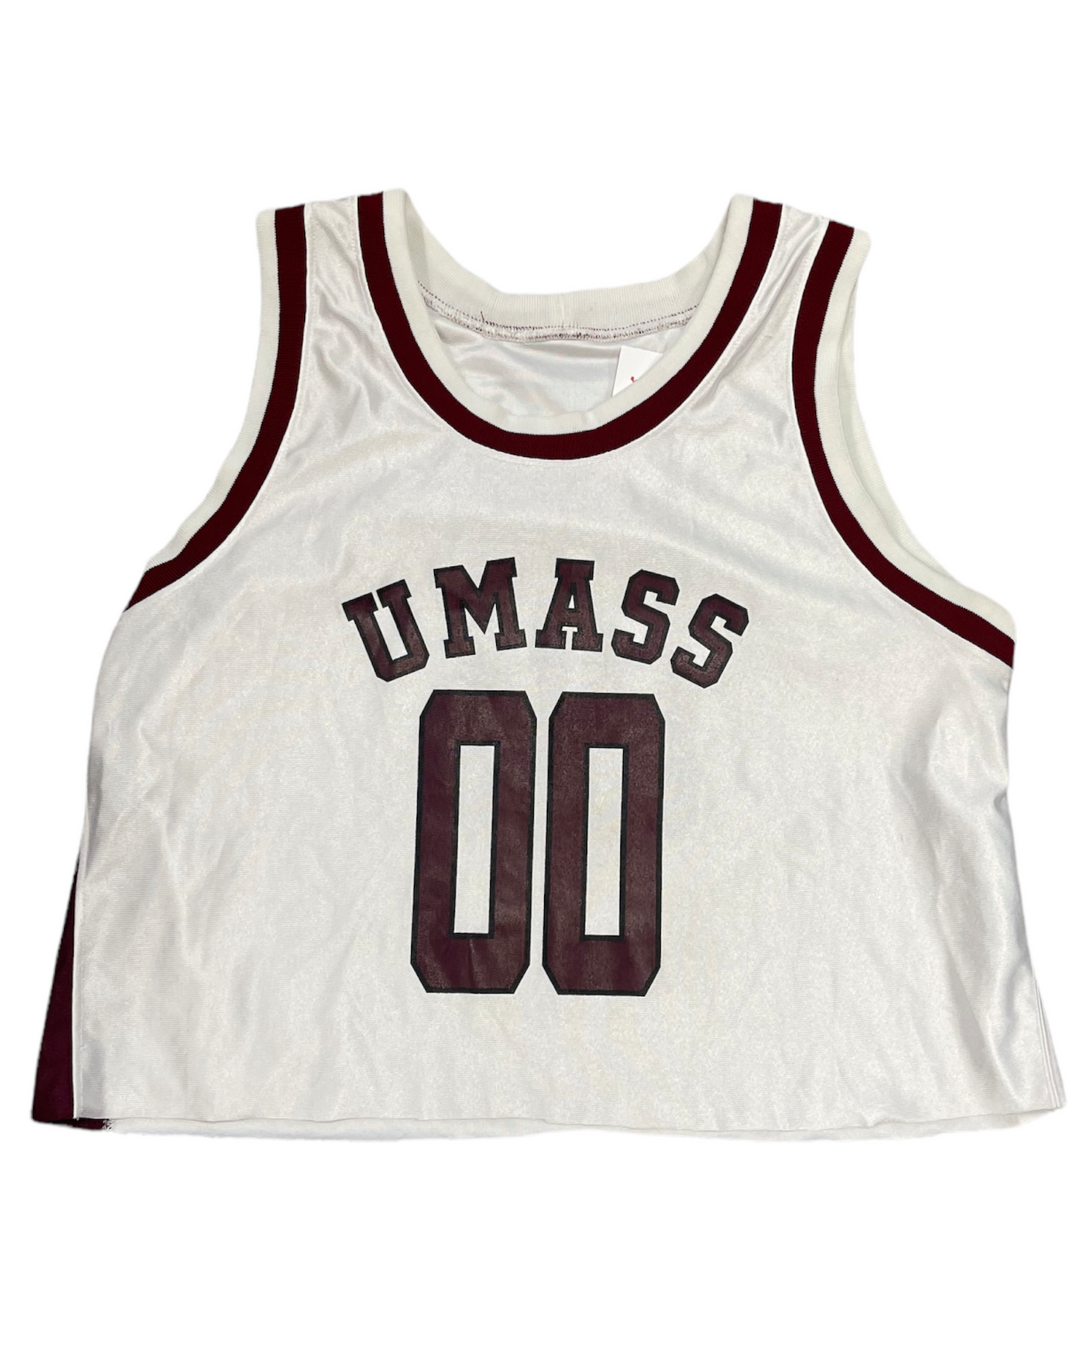 UMass Vintage Sweatshirt